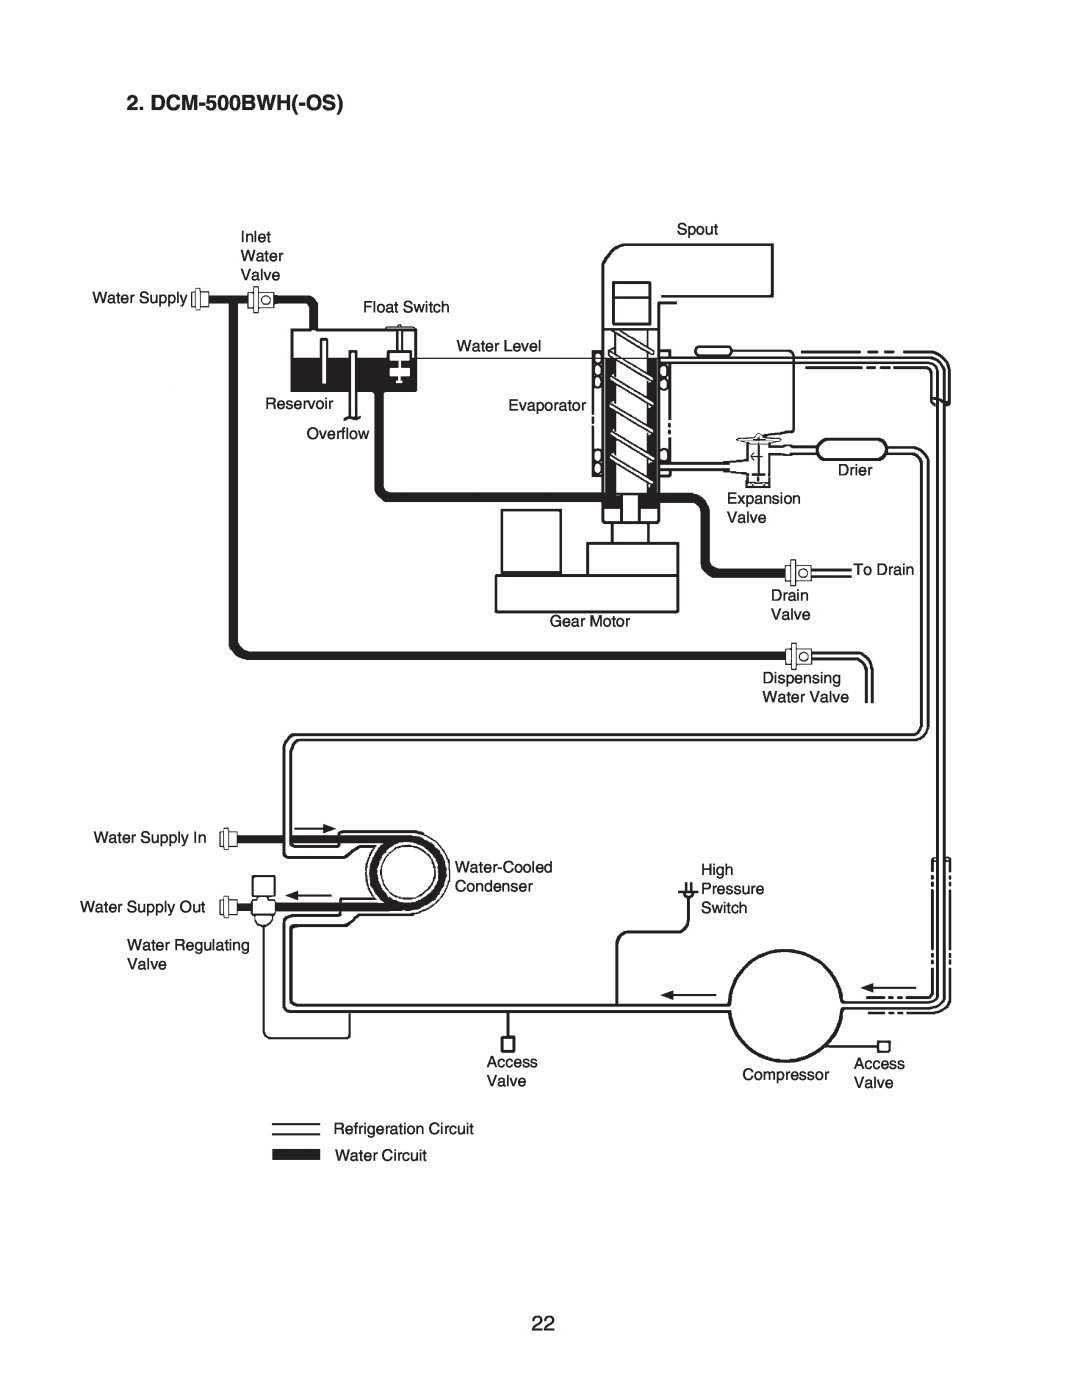 Hoshizaki DCM-500BWH-OS Inlet Water Valve, Water Supply, Float Switch, Valve Refrigeration Circuit Water Circuit 